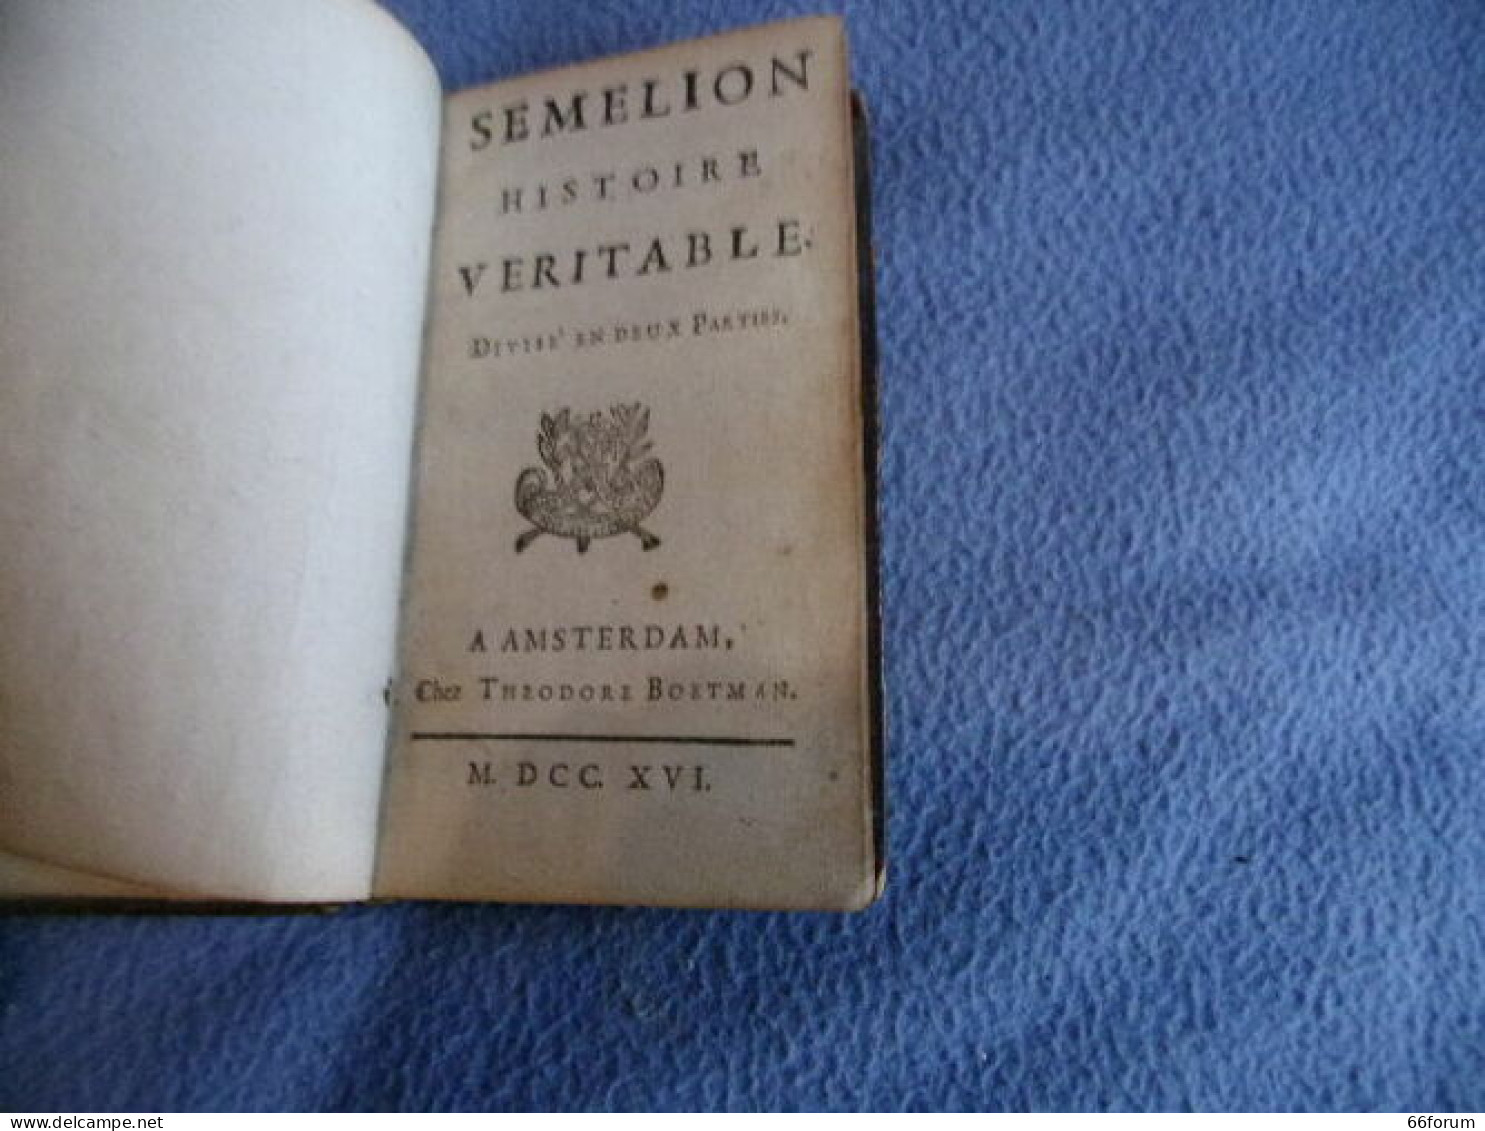 Semelion Histoire Véritable - 1701-1800